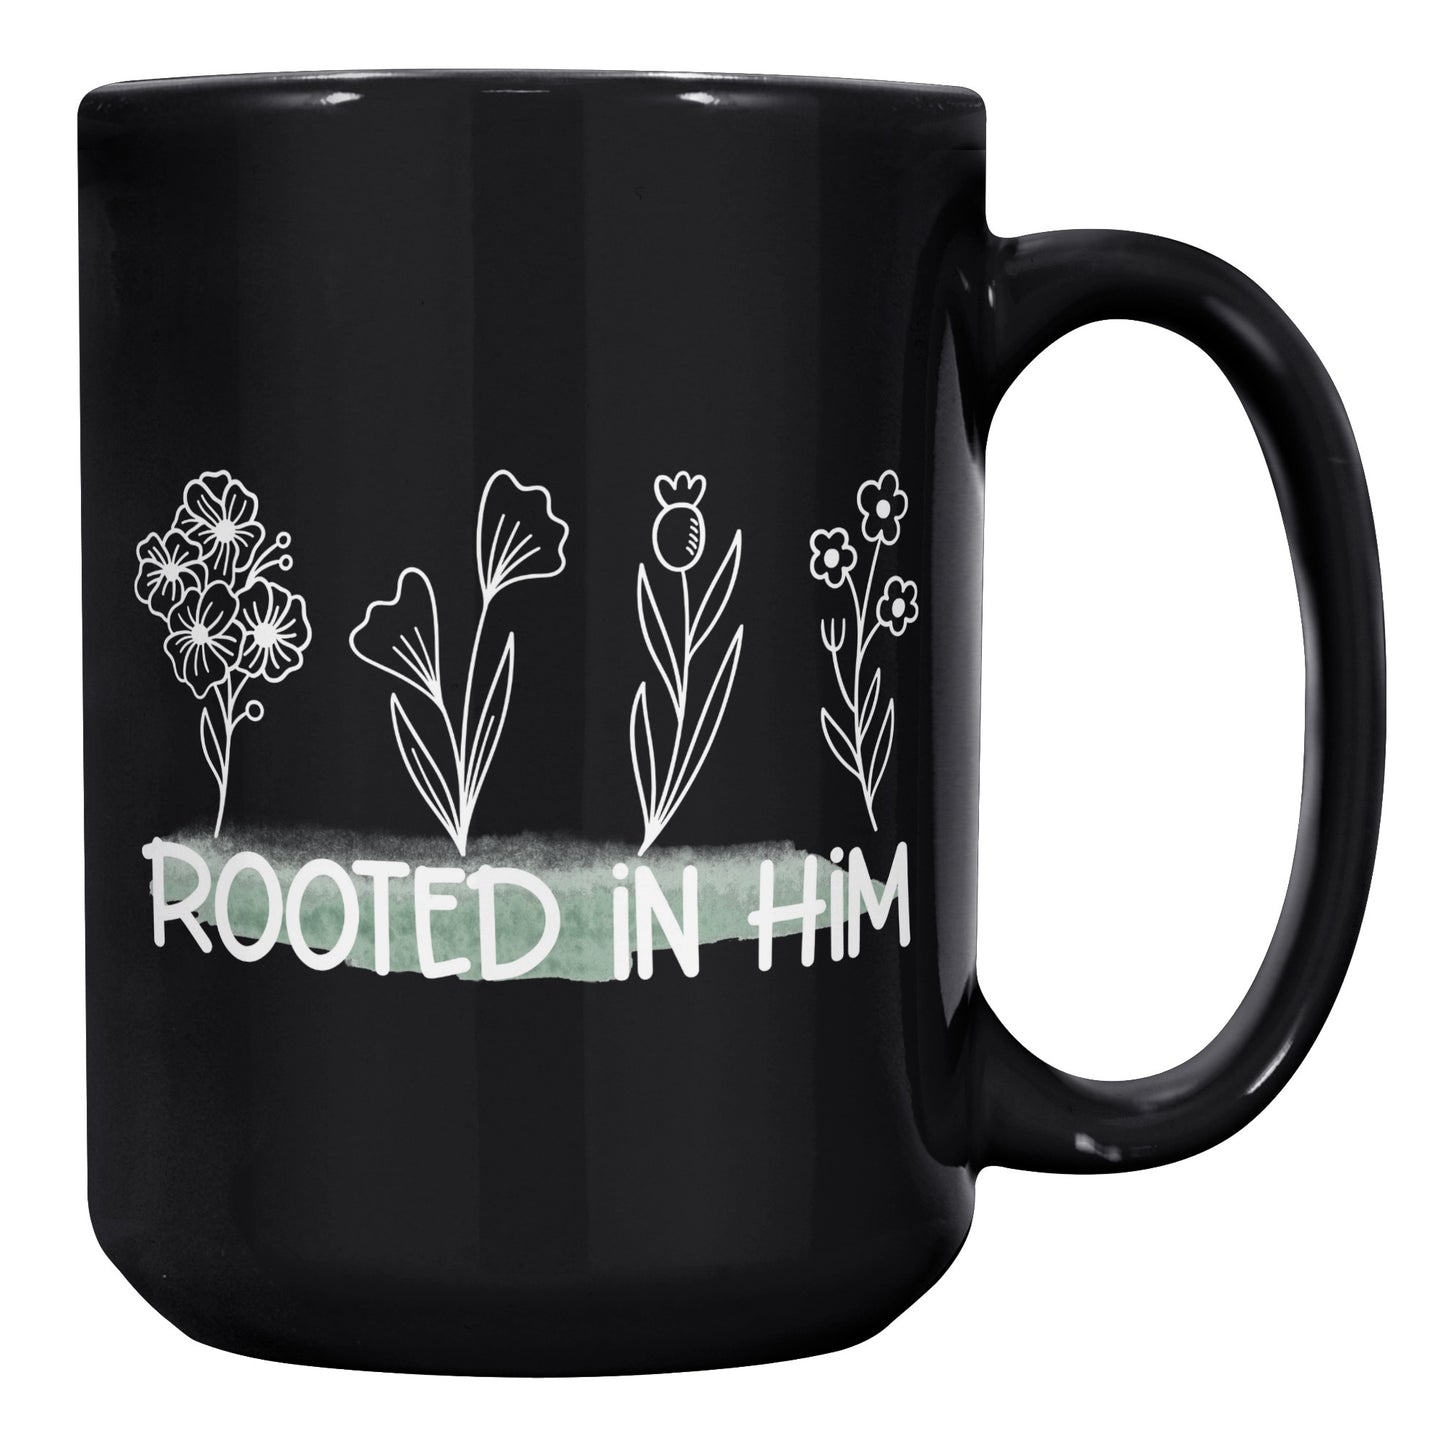 Rooted in Him 15 oz Black Ceramic Mug